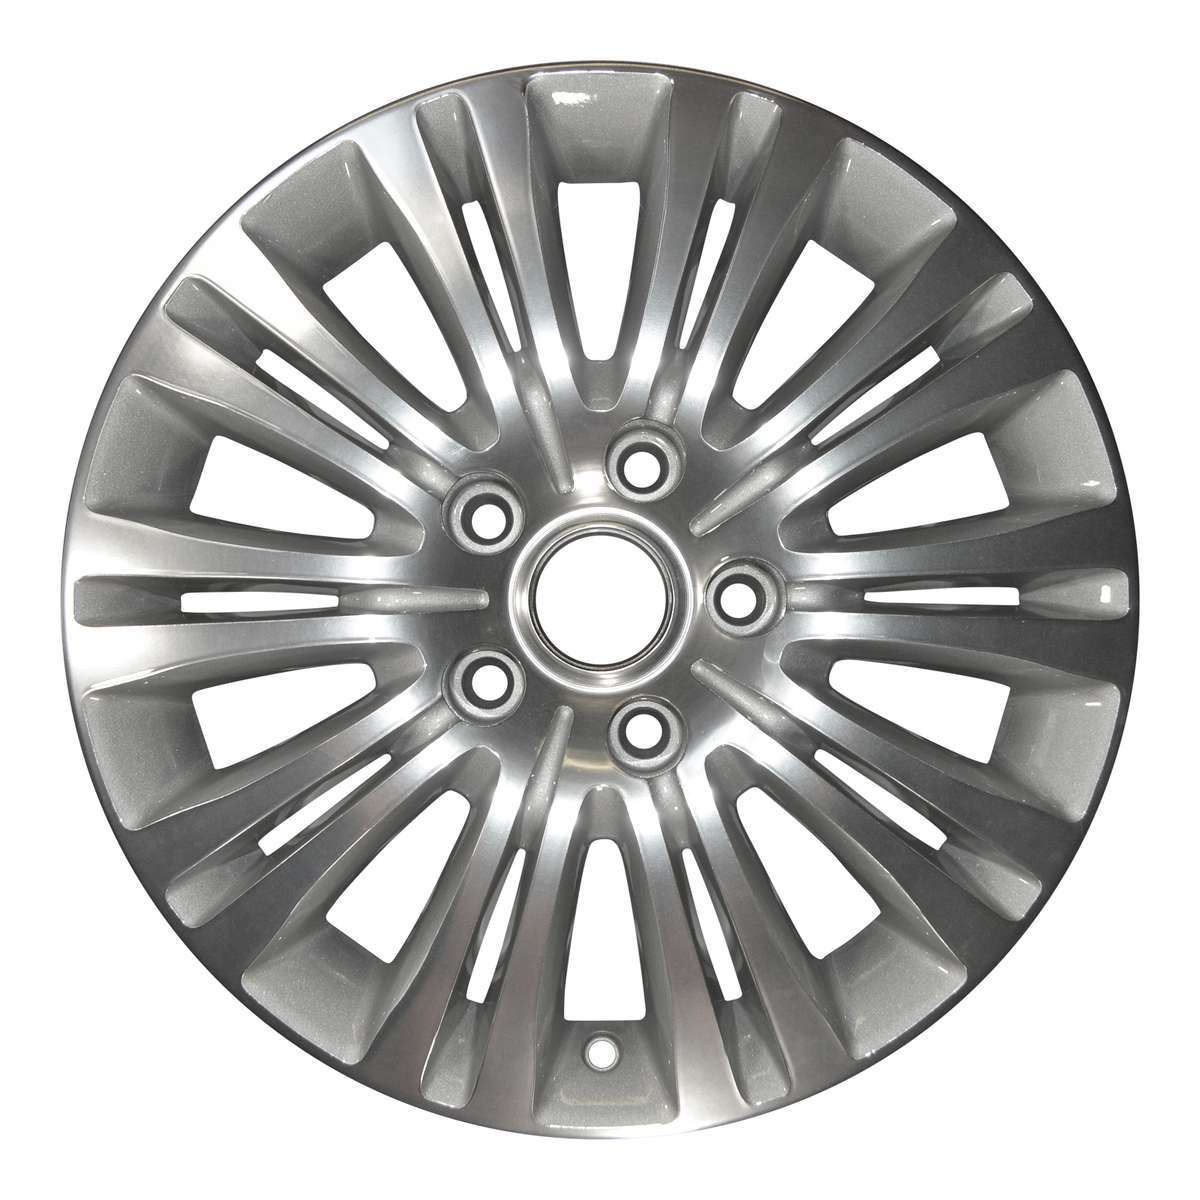 2013 Chrysler Town & Country 17" OEM Wheel Rim W2490PS